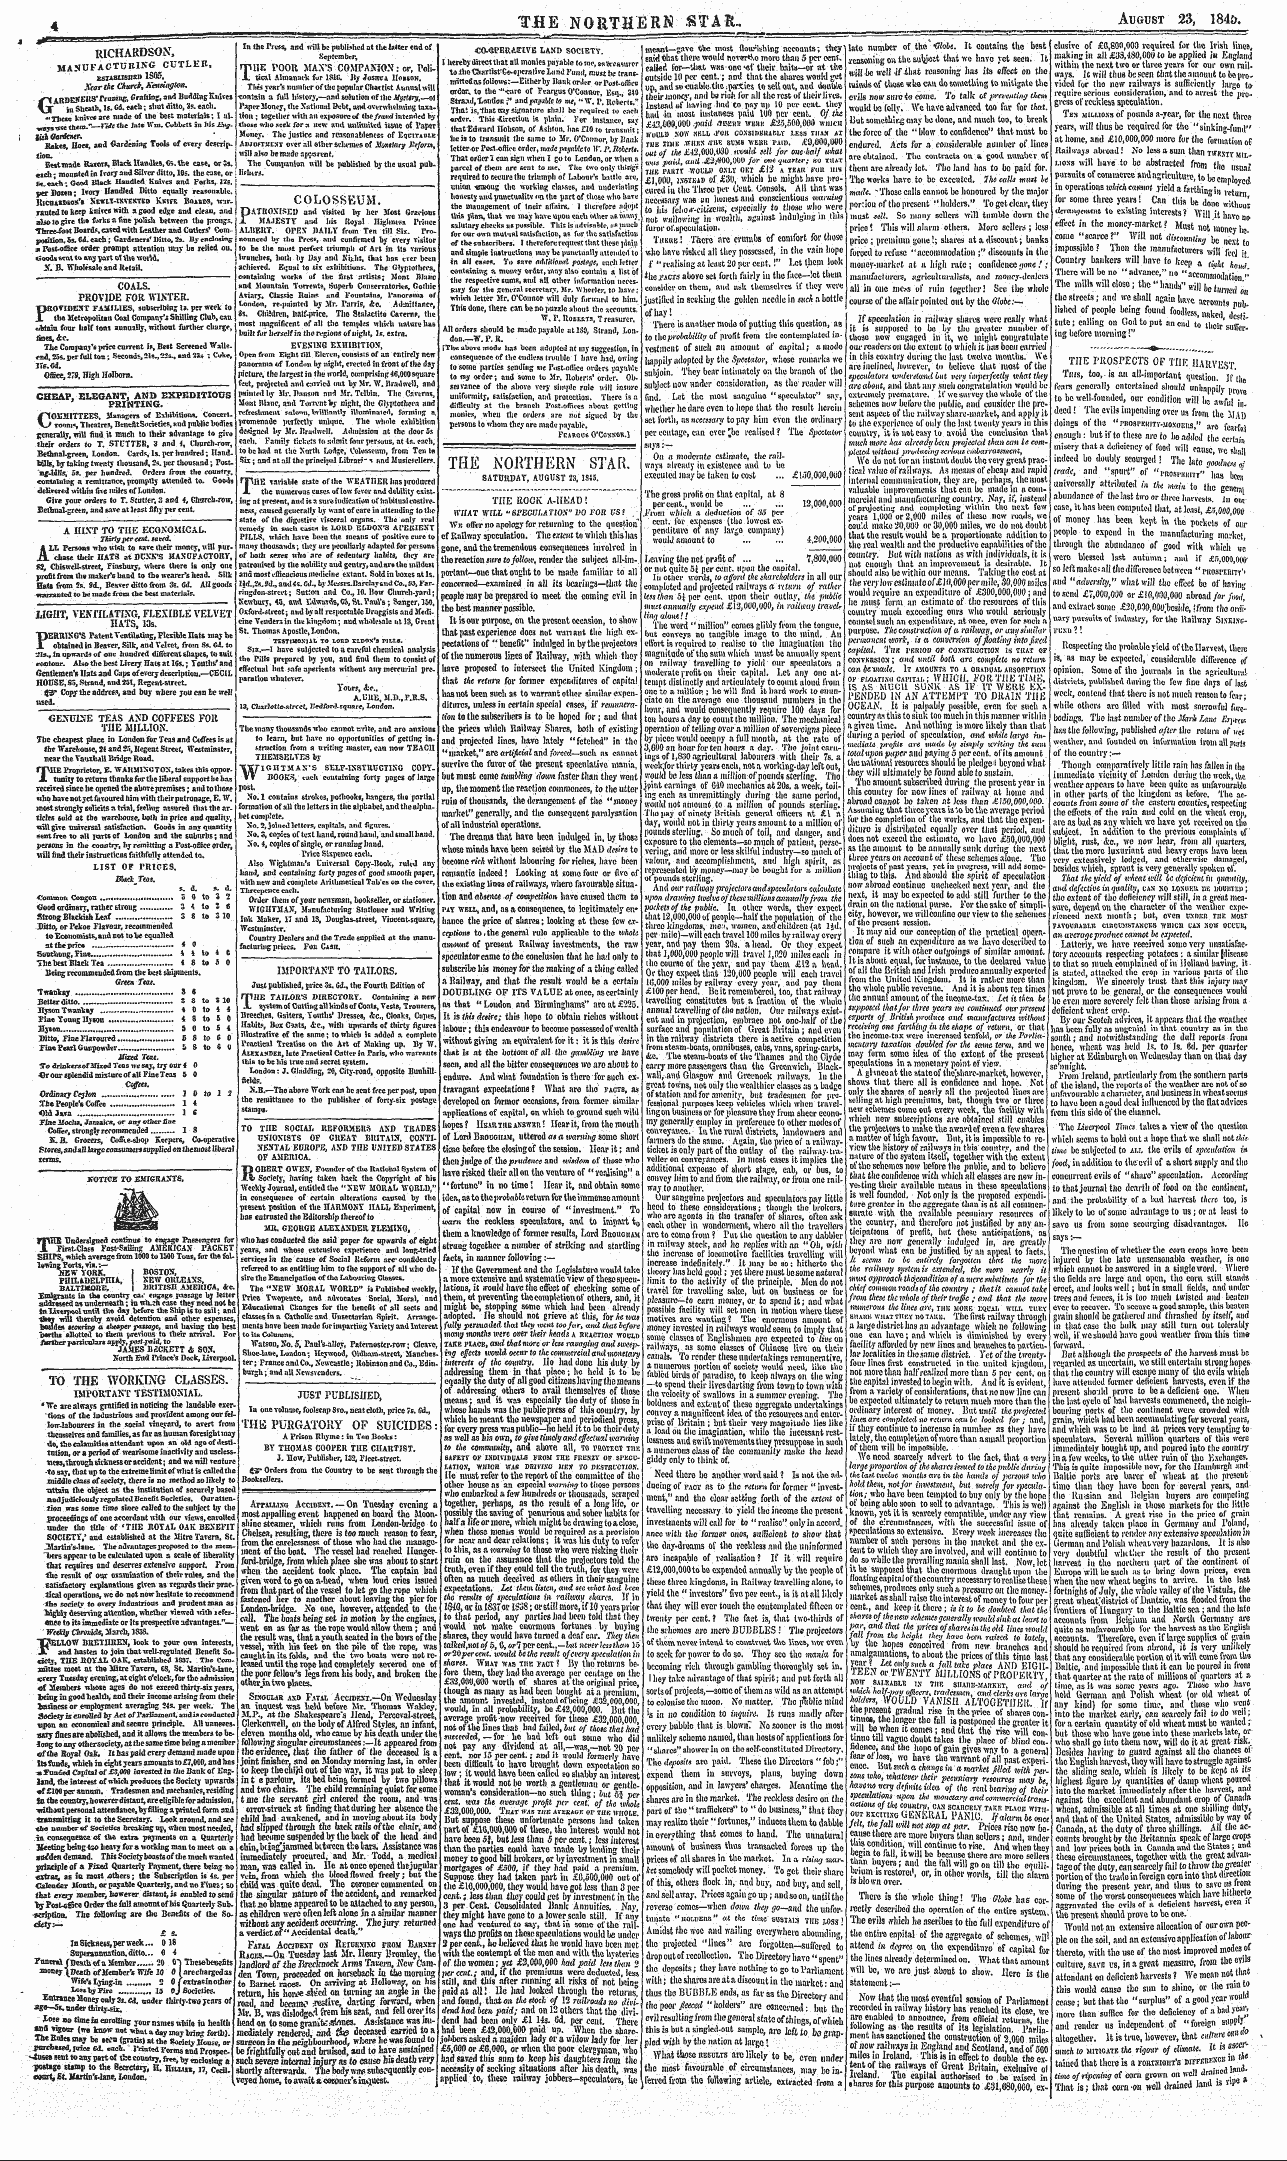 Northern Star (1837-1852): jS F Y, 4th edition - Ad00411